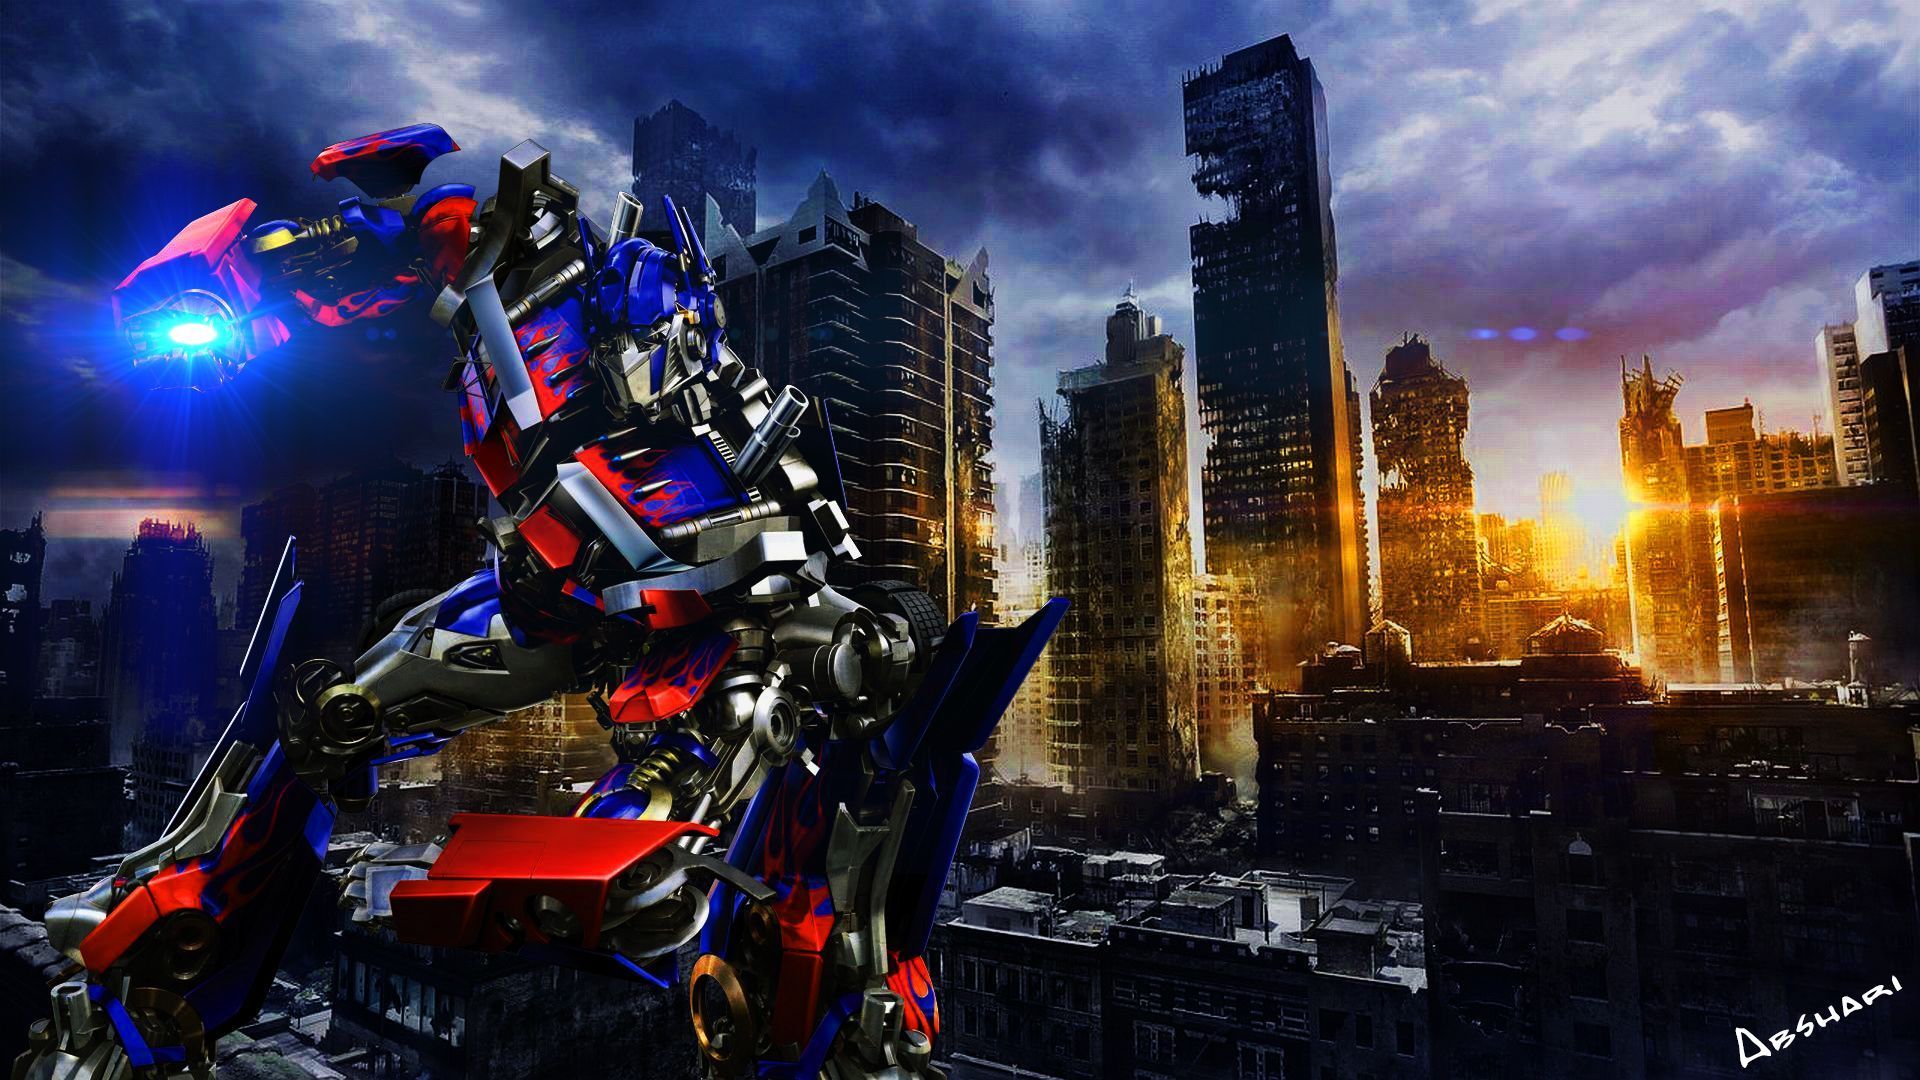 Transformers Optimus Prime wallpaper by hamidabshari on DeviantArt